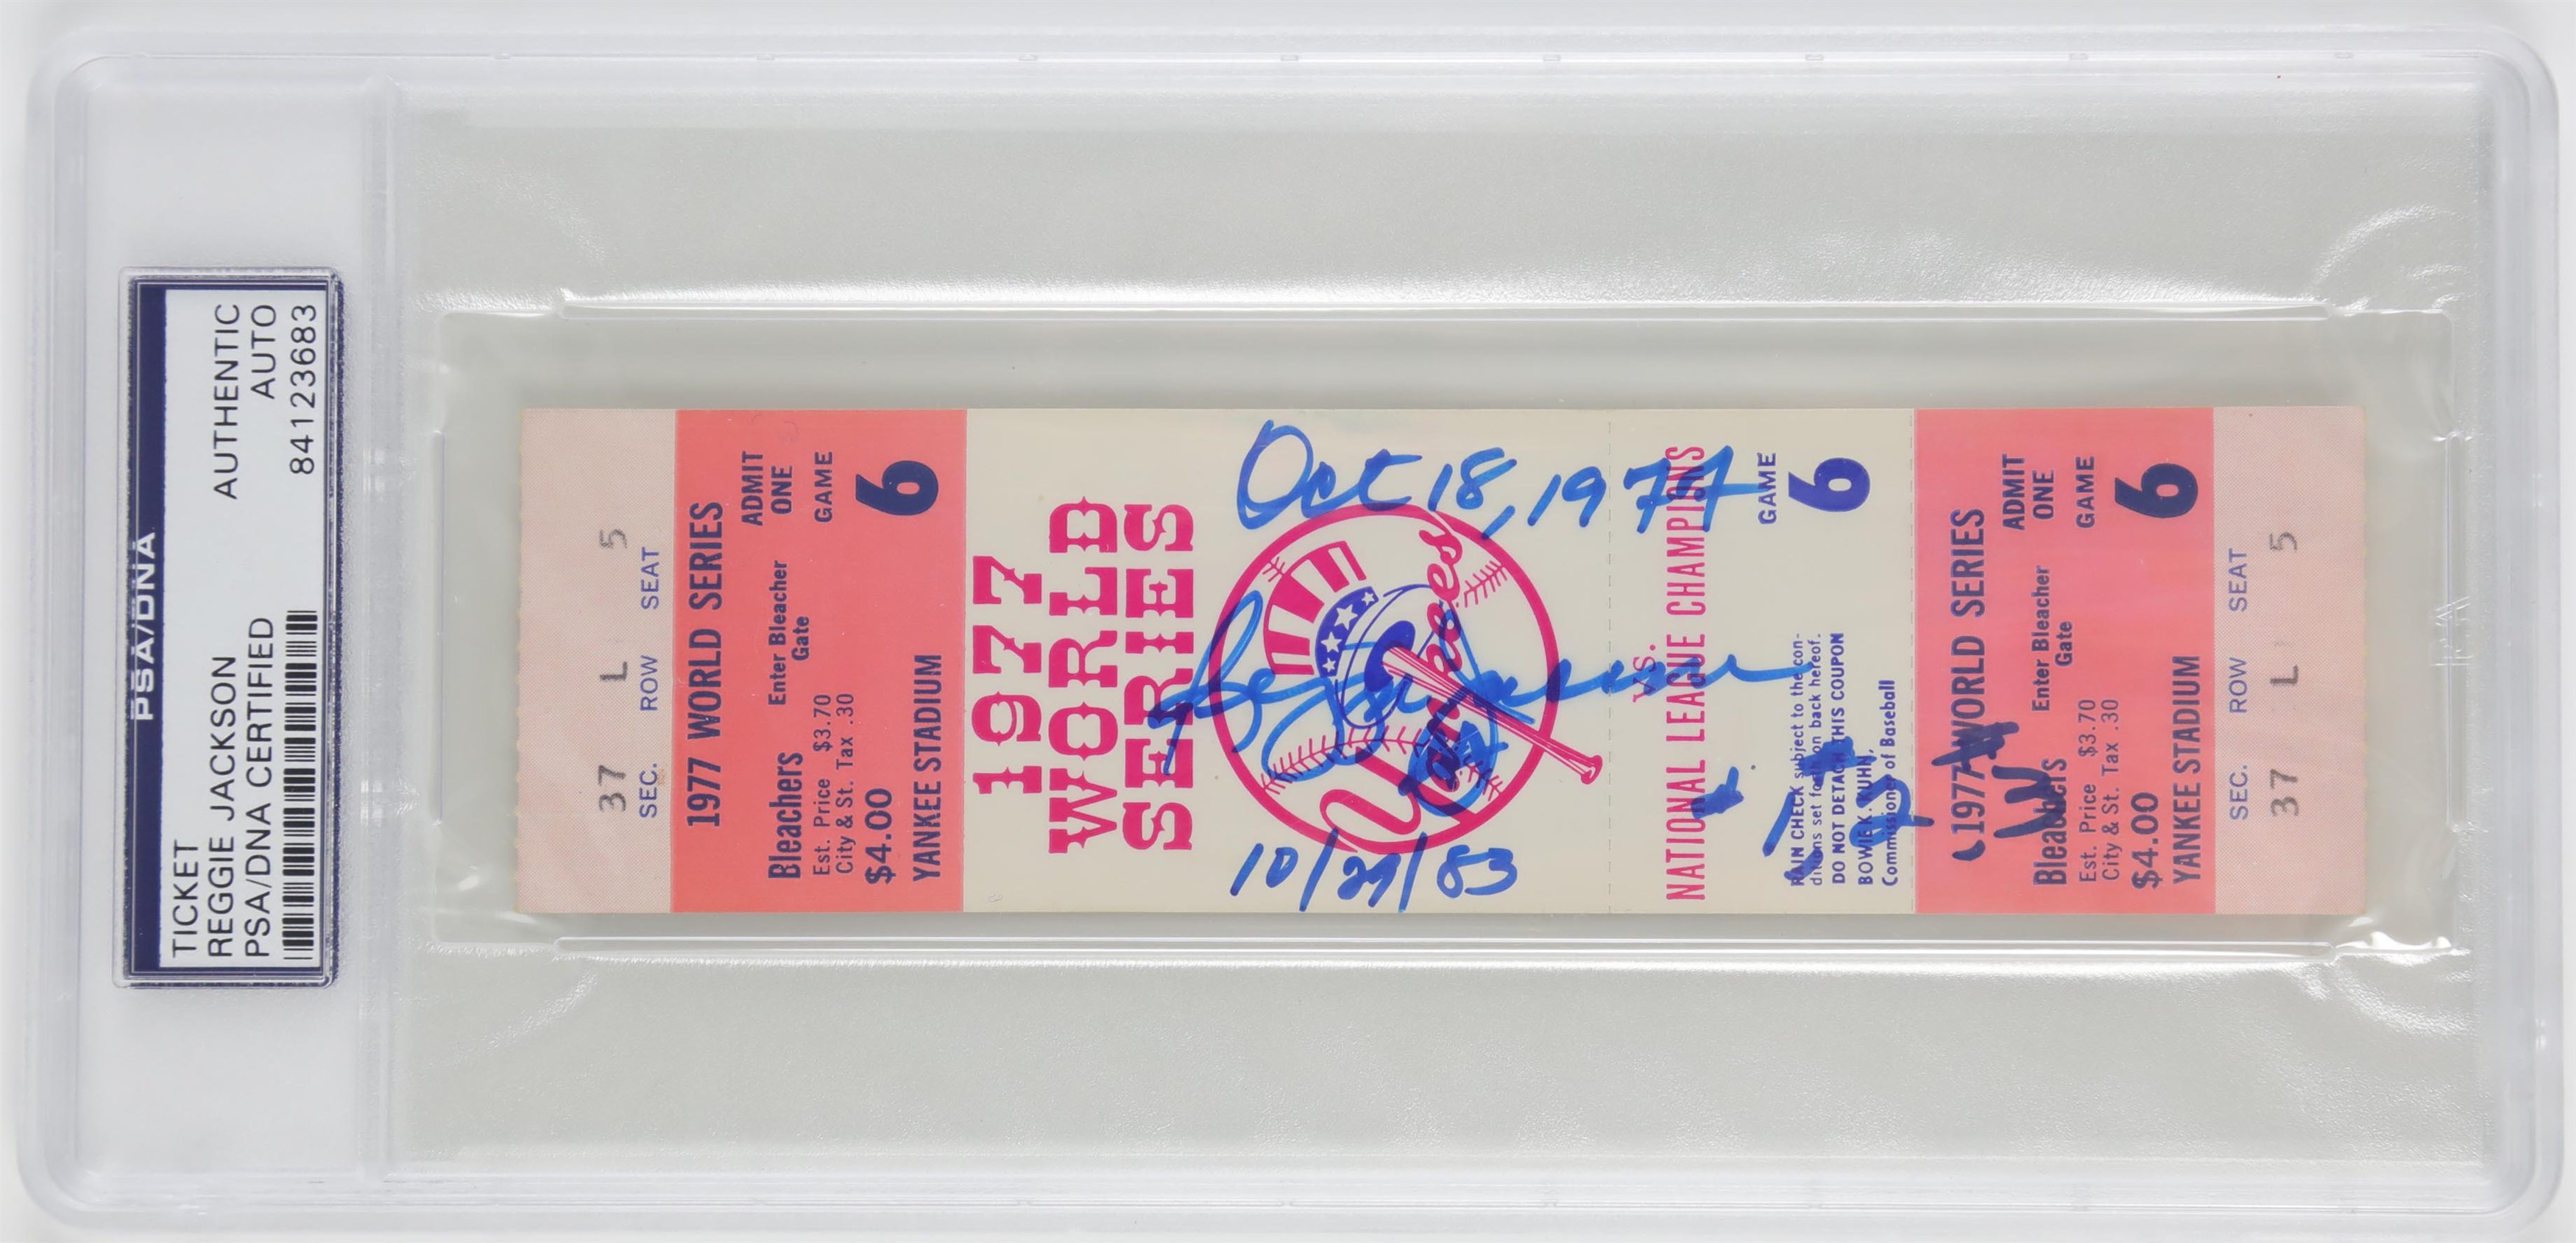 NY Yankees, Giants & Mets - Gorgeous Reggie Jackson Signed 1977 World Series Game 6 Full Ticket (PSA)